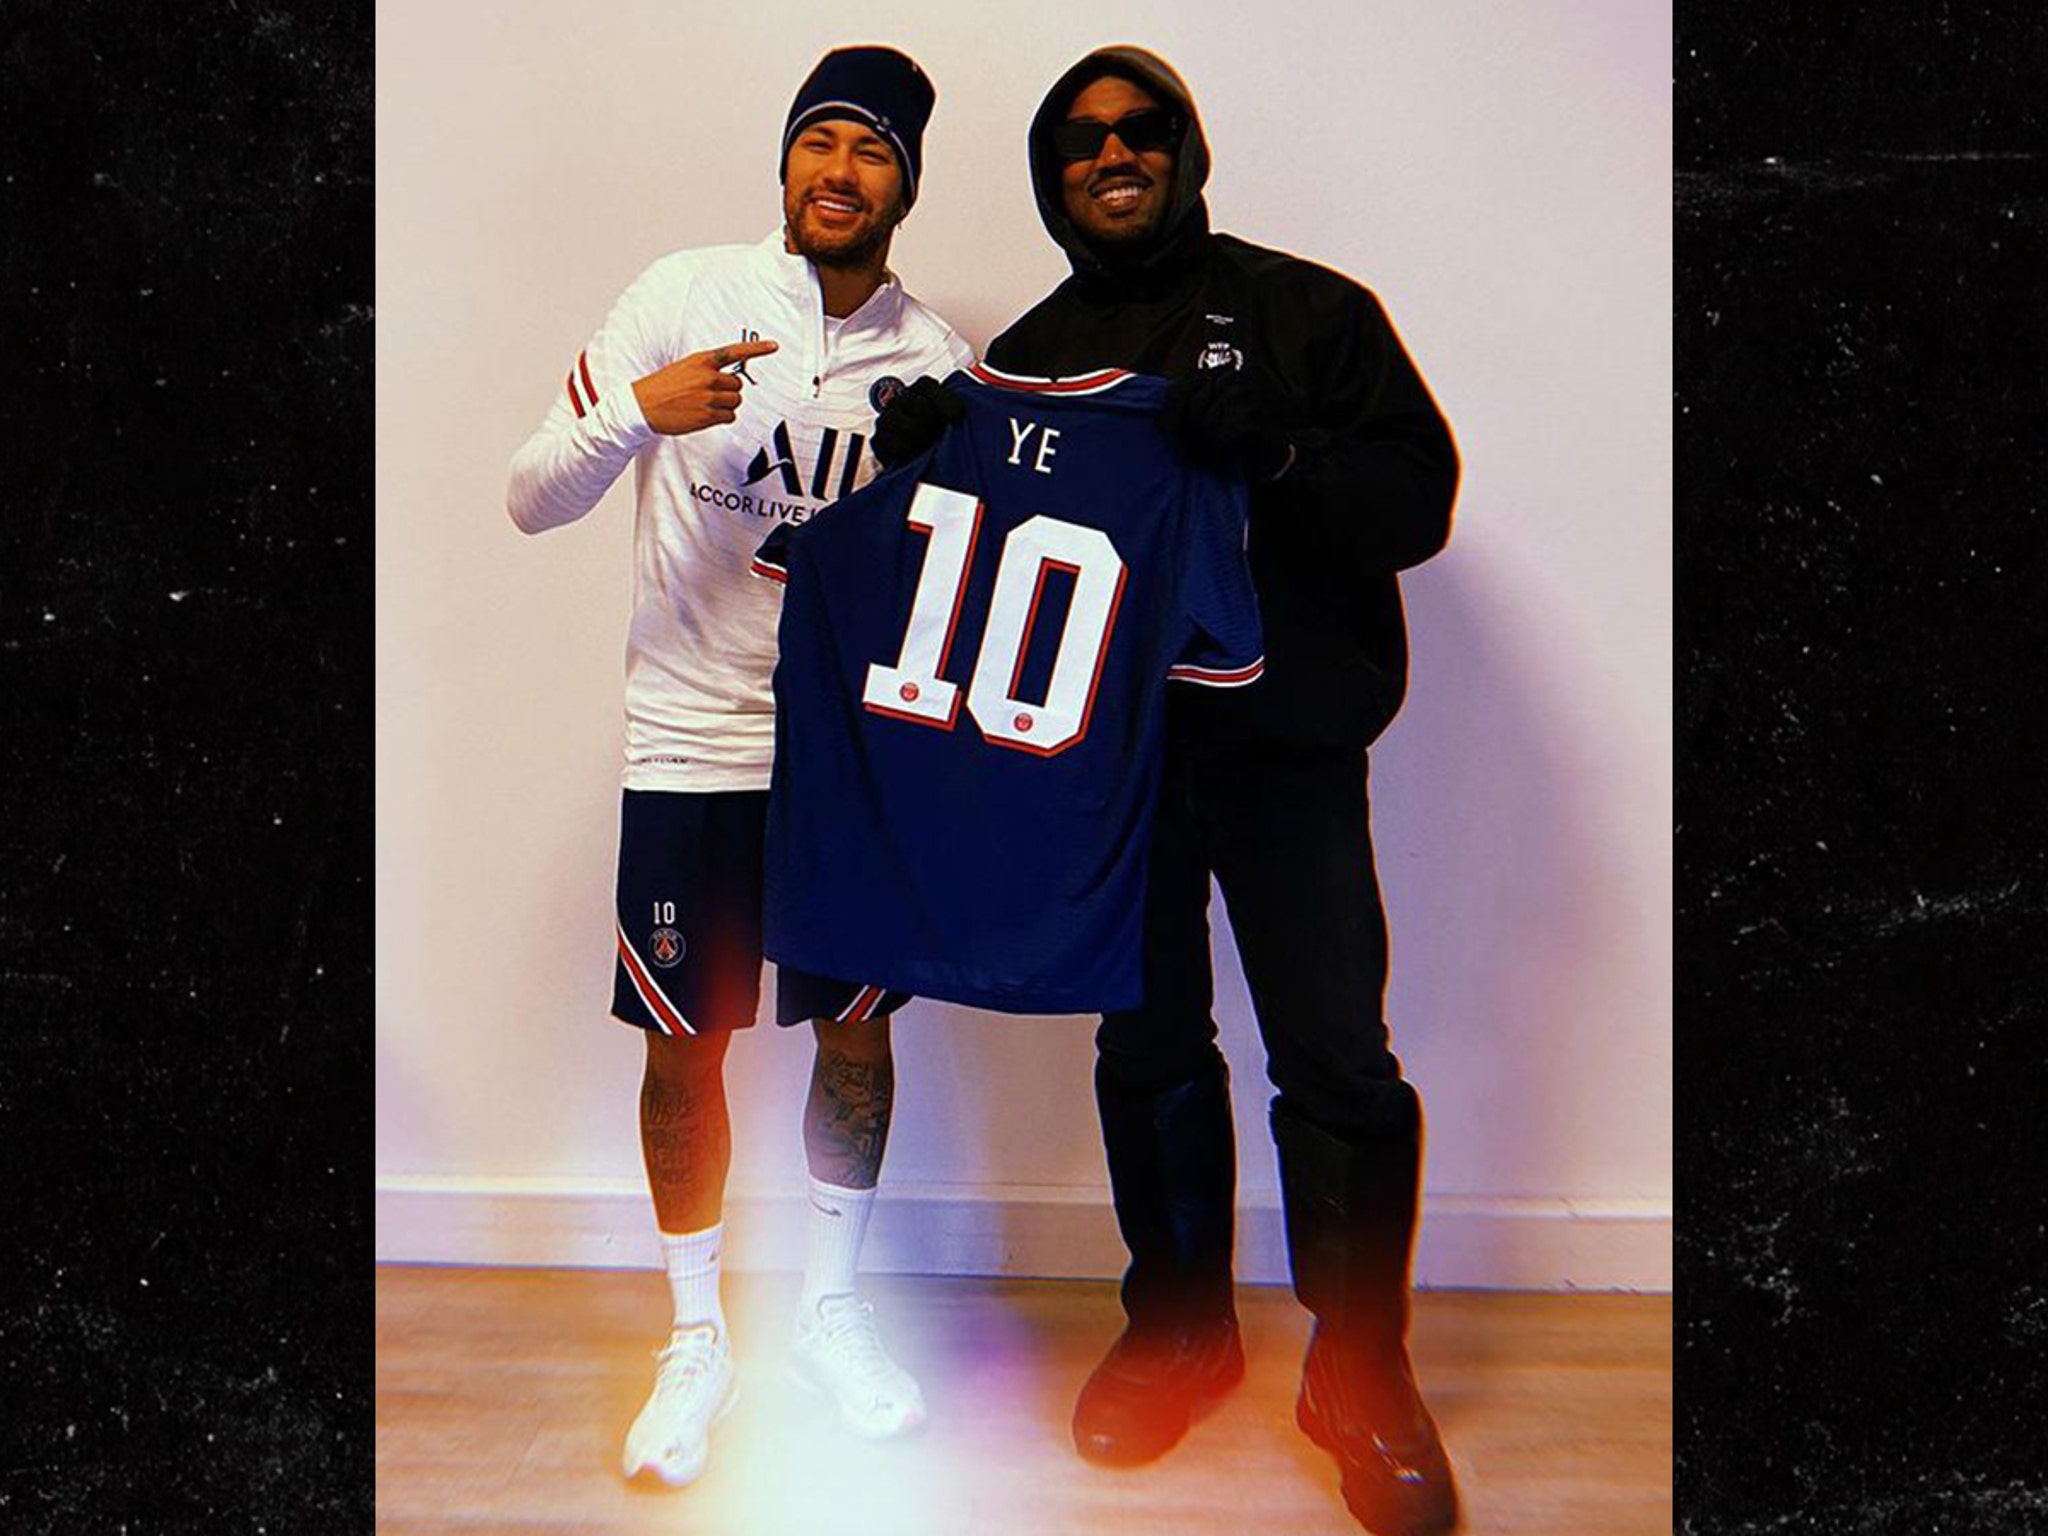 Neymar Gifts Kanye West Custom Jersey At Meeting In Paris, 'Legend